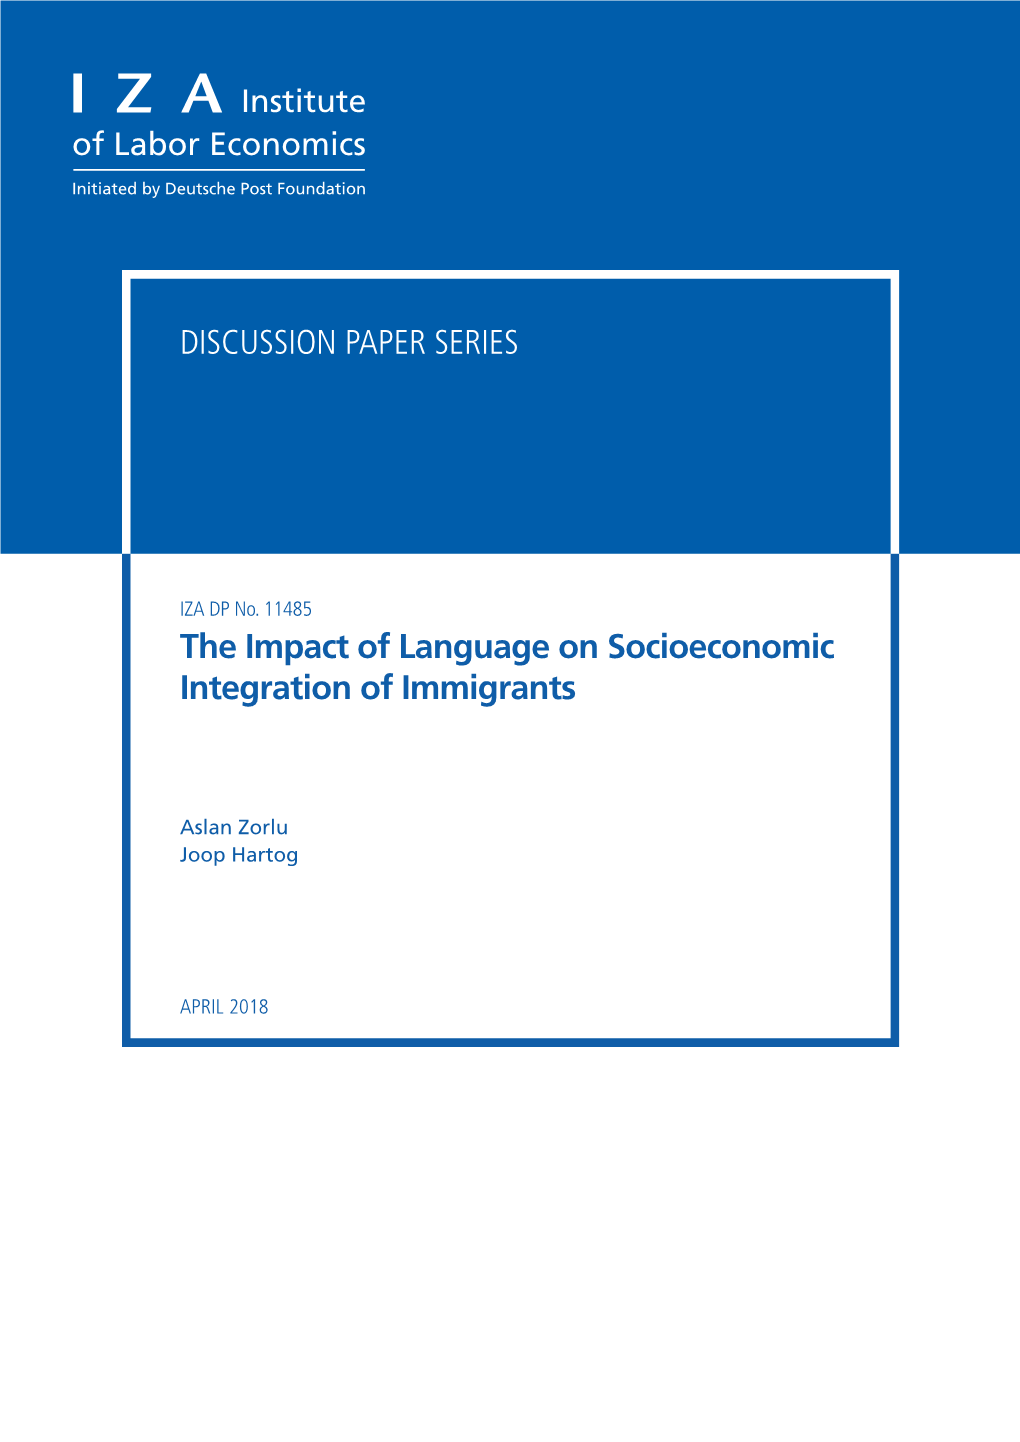 The Impact of Language on Socioeconomic Integration of Immigrants